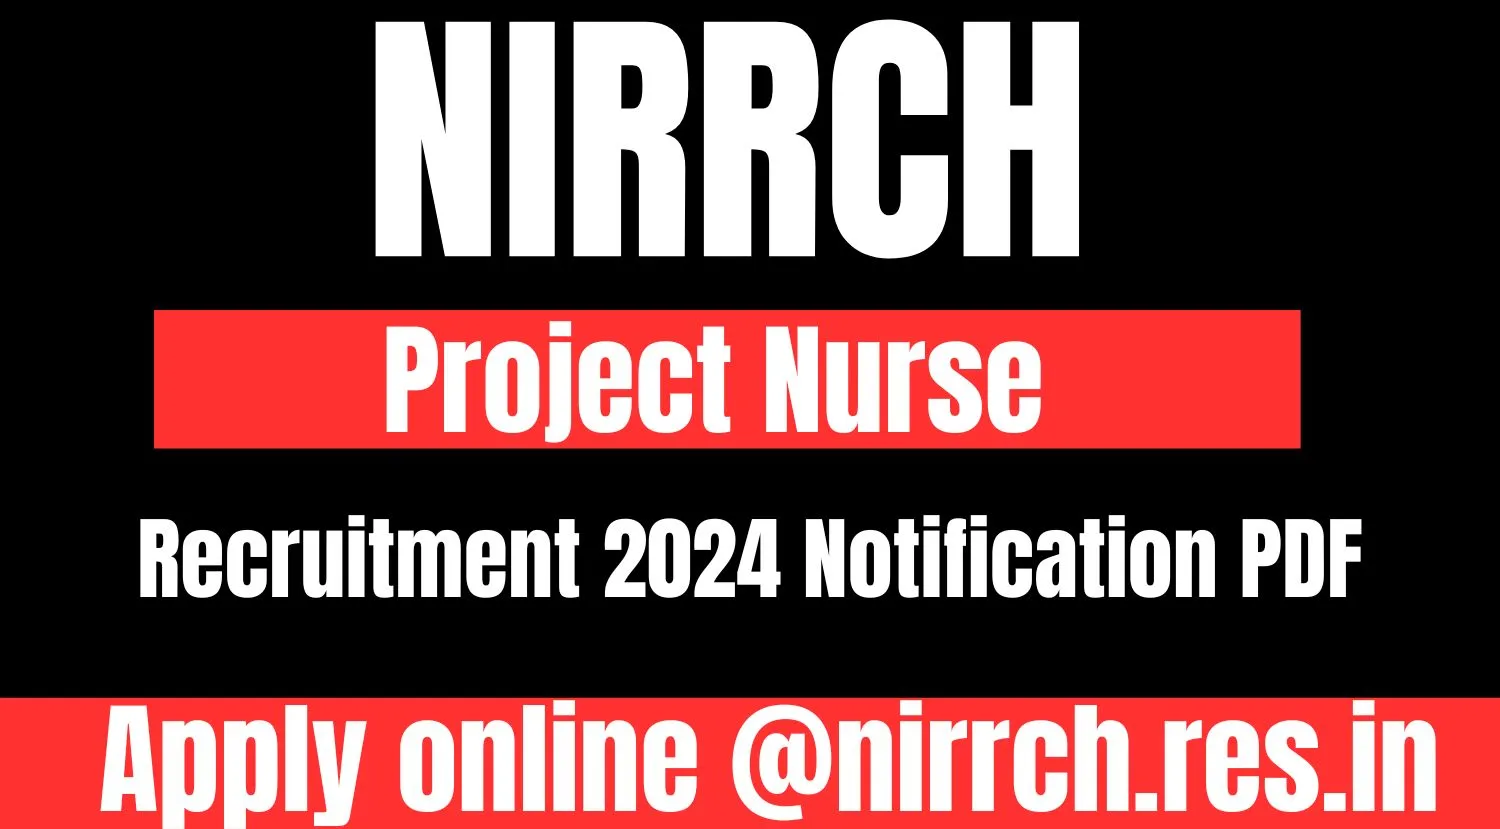 NIRRCH Project Nurse Recruitment 2024